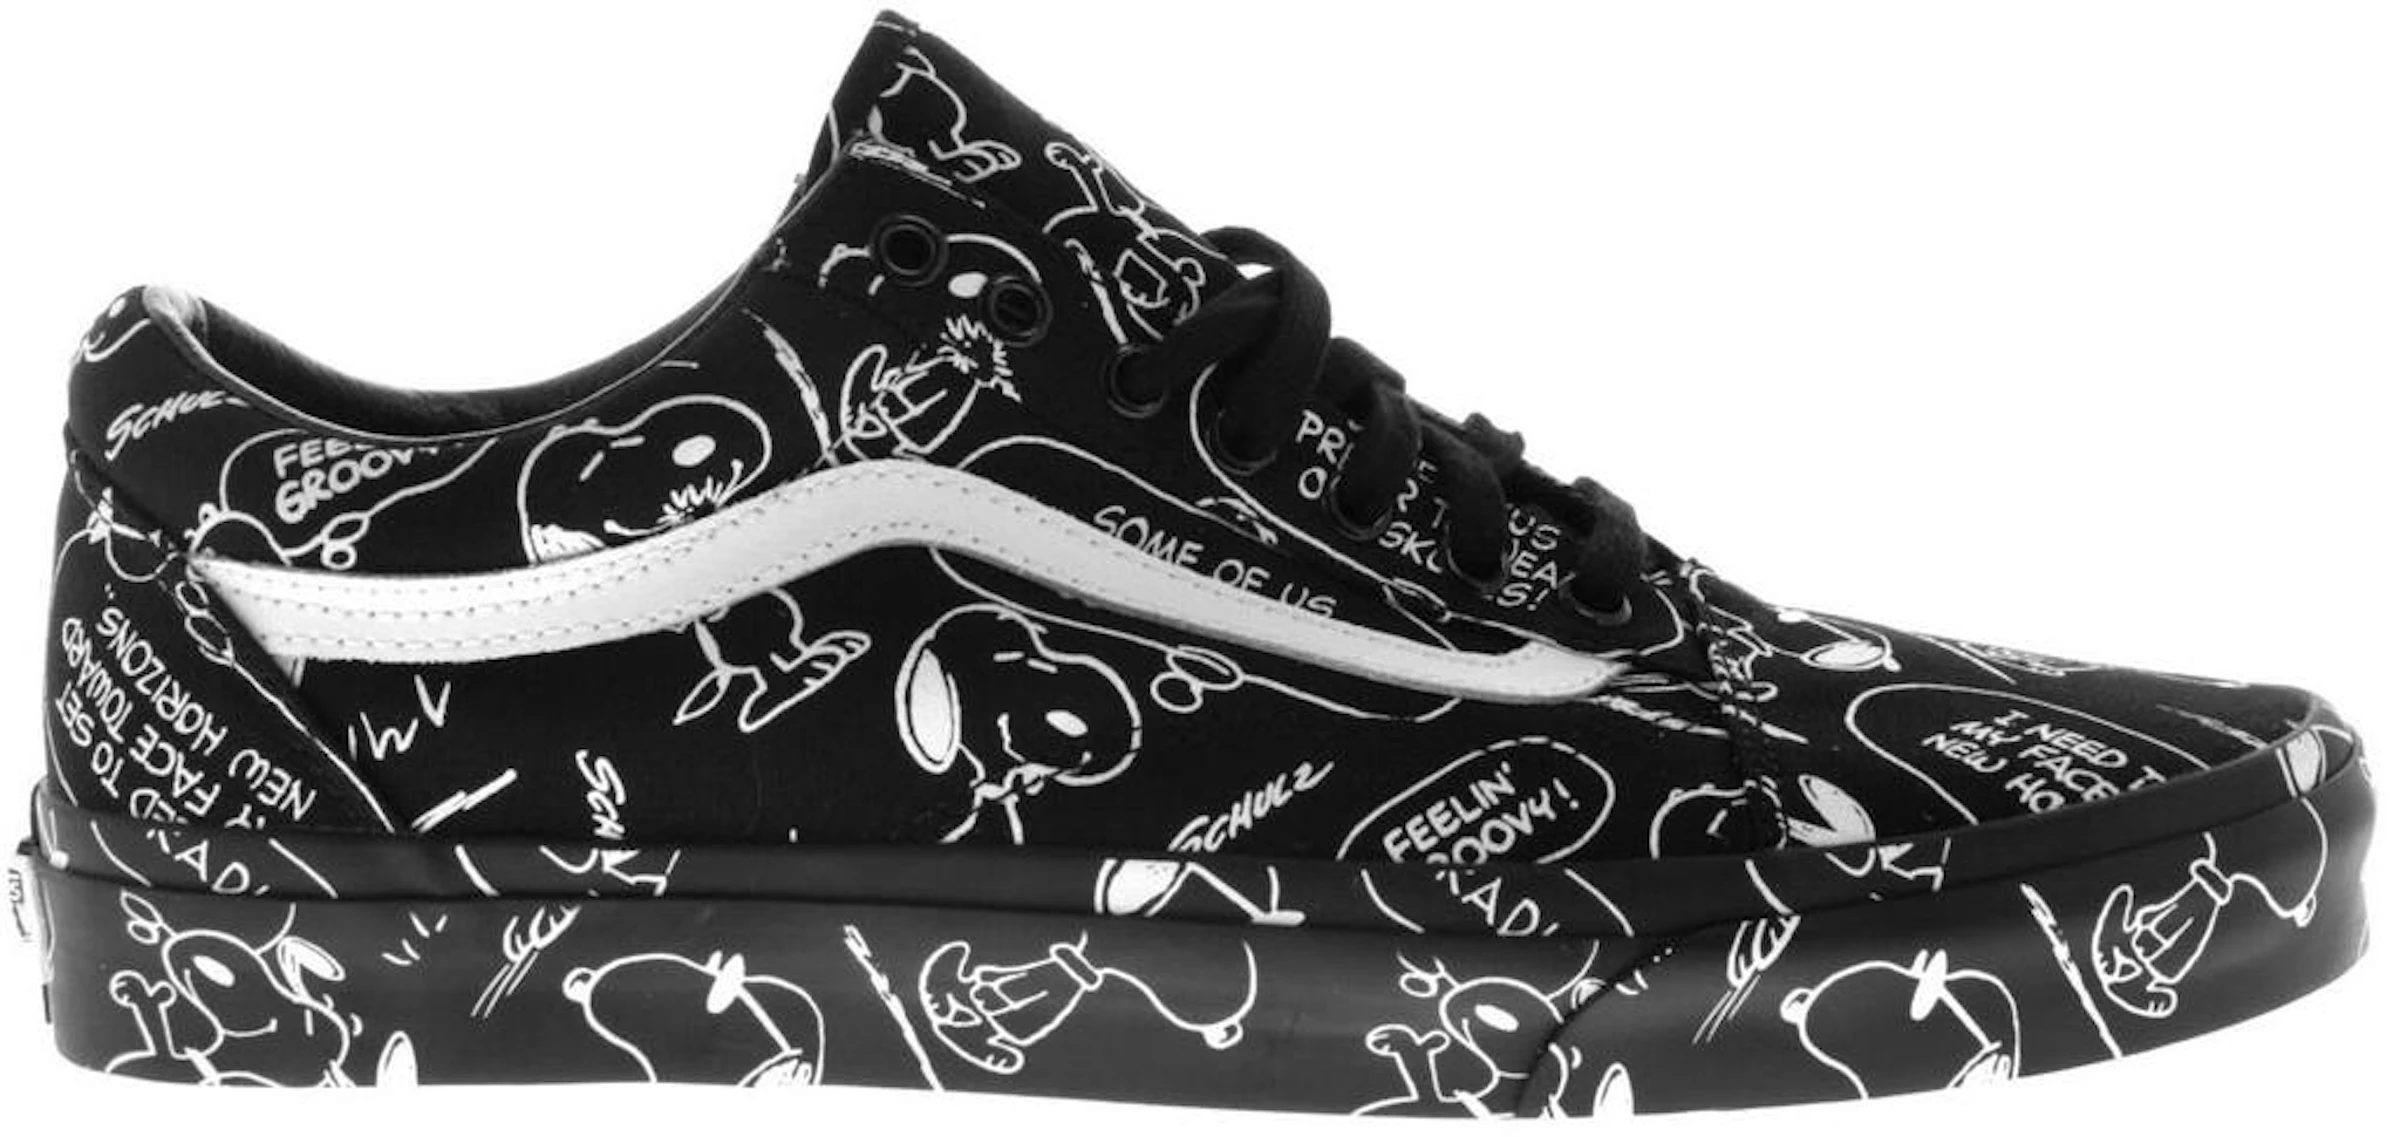 Vans Snoopy Sneakers | stickhealthcare.co.uk